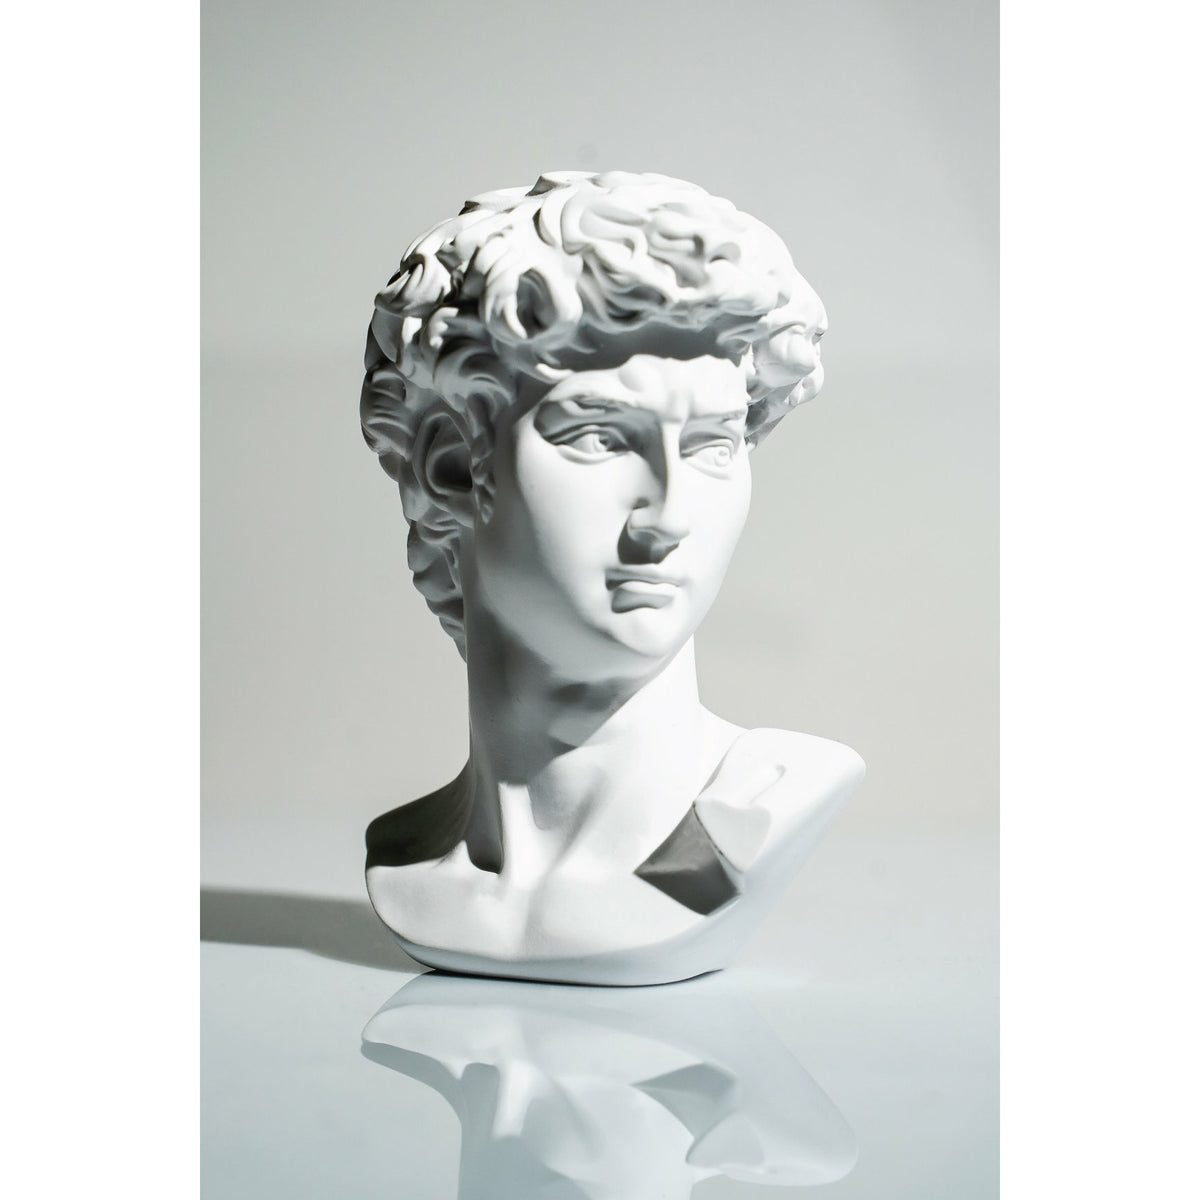 David Bust Sculpture - White (50% OFF)